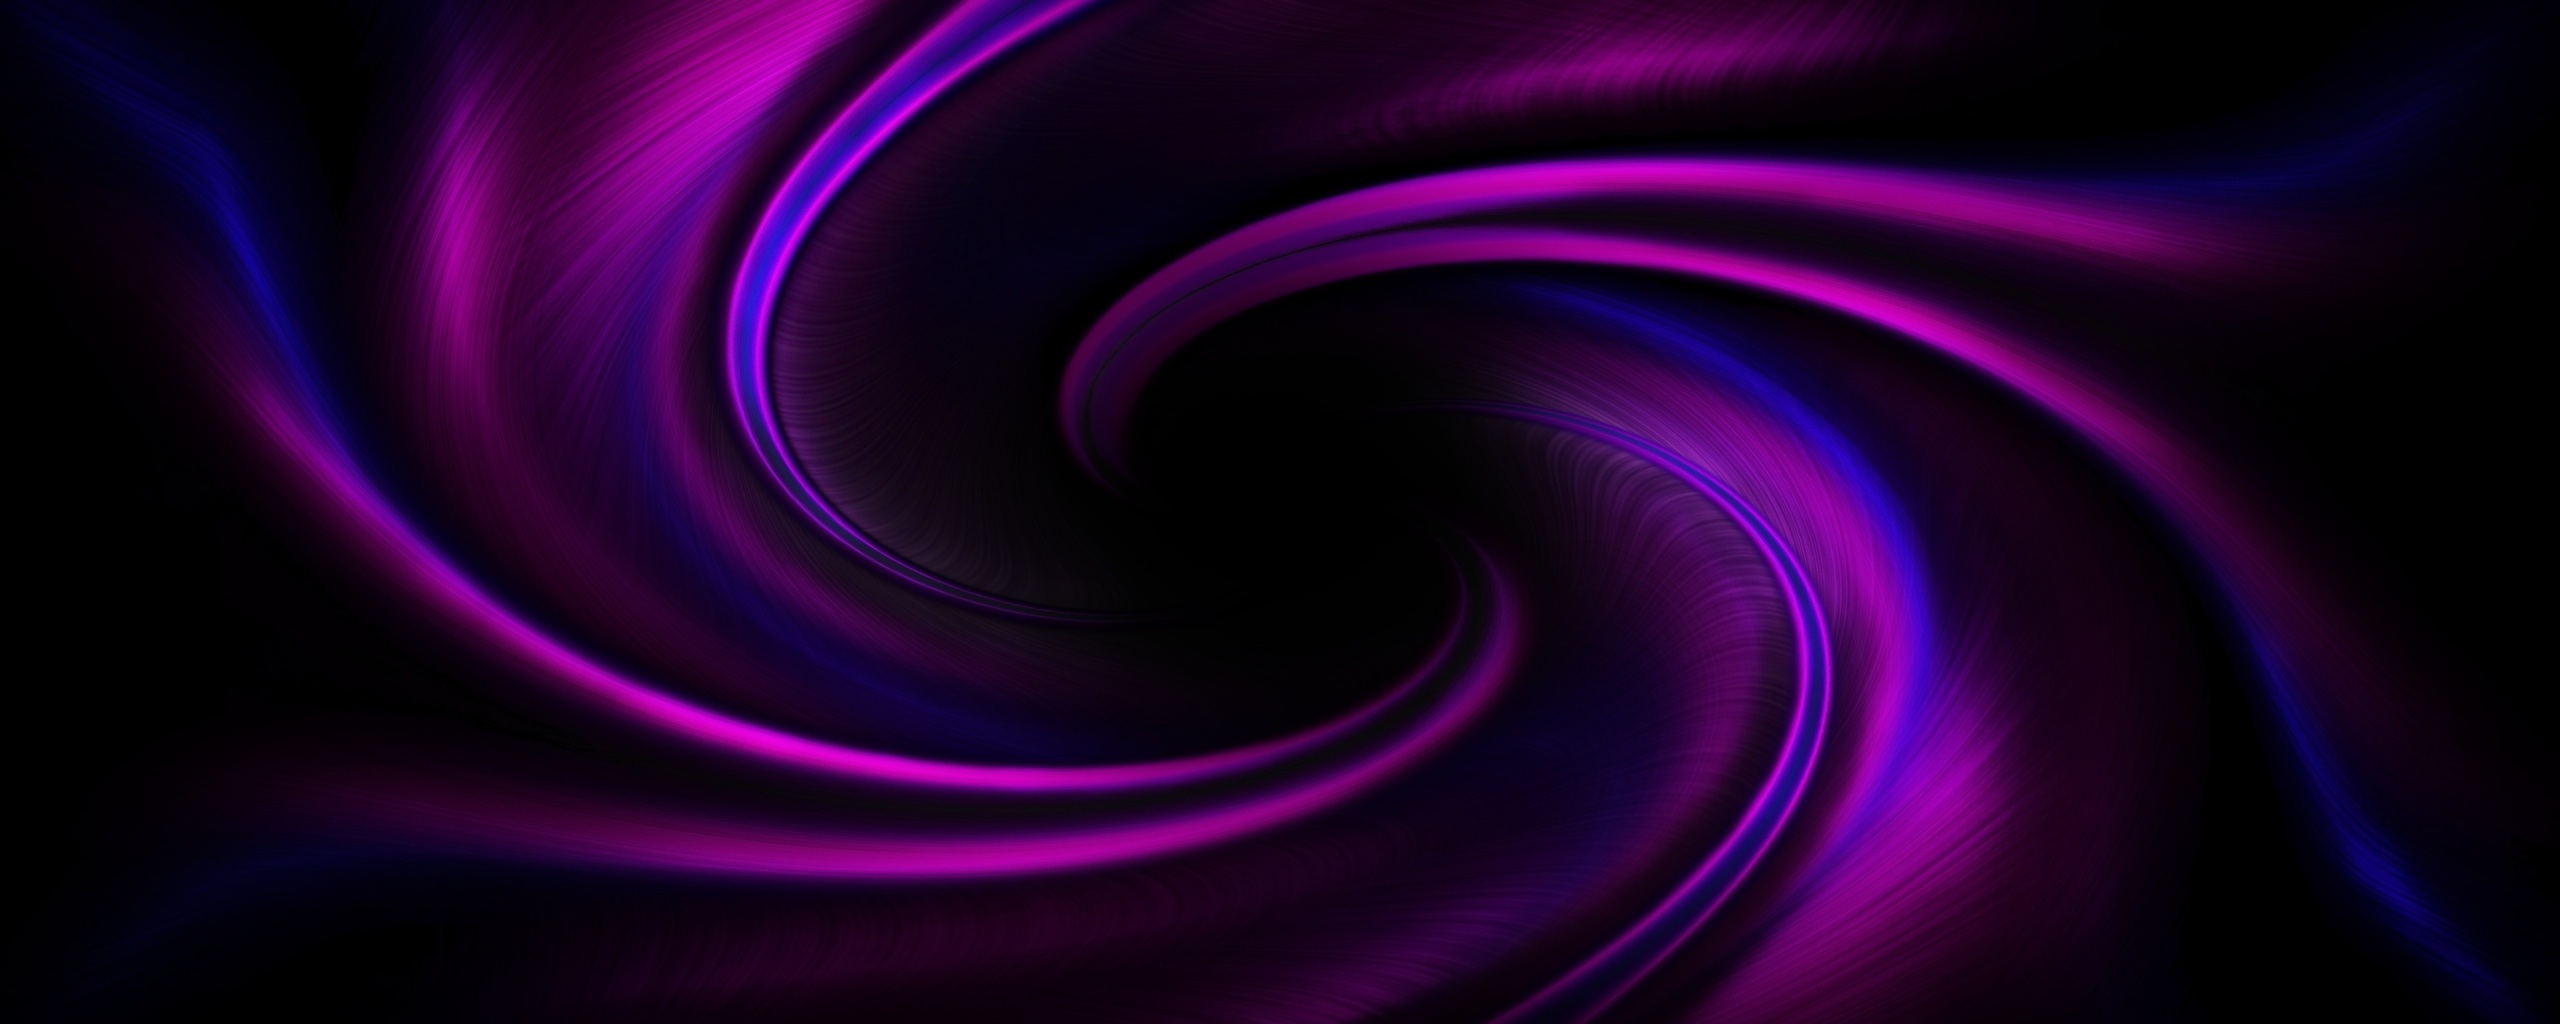 Abstract Purple Swirl - 4k Wallpapers - 40.000+ ipad wallpapers 4k - 4k ...